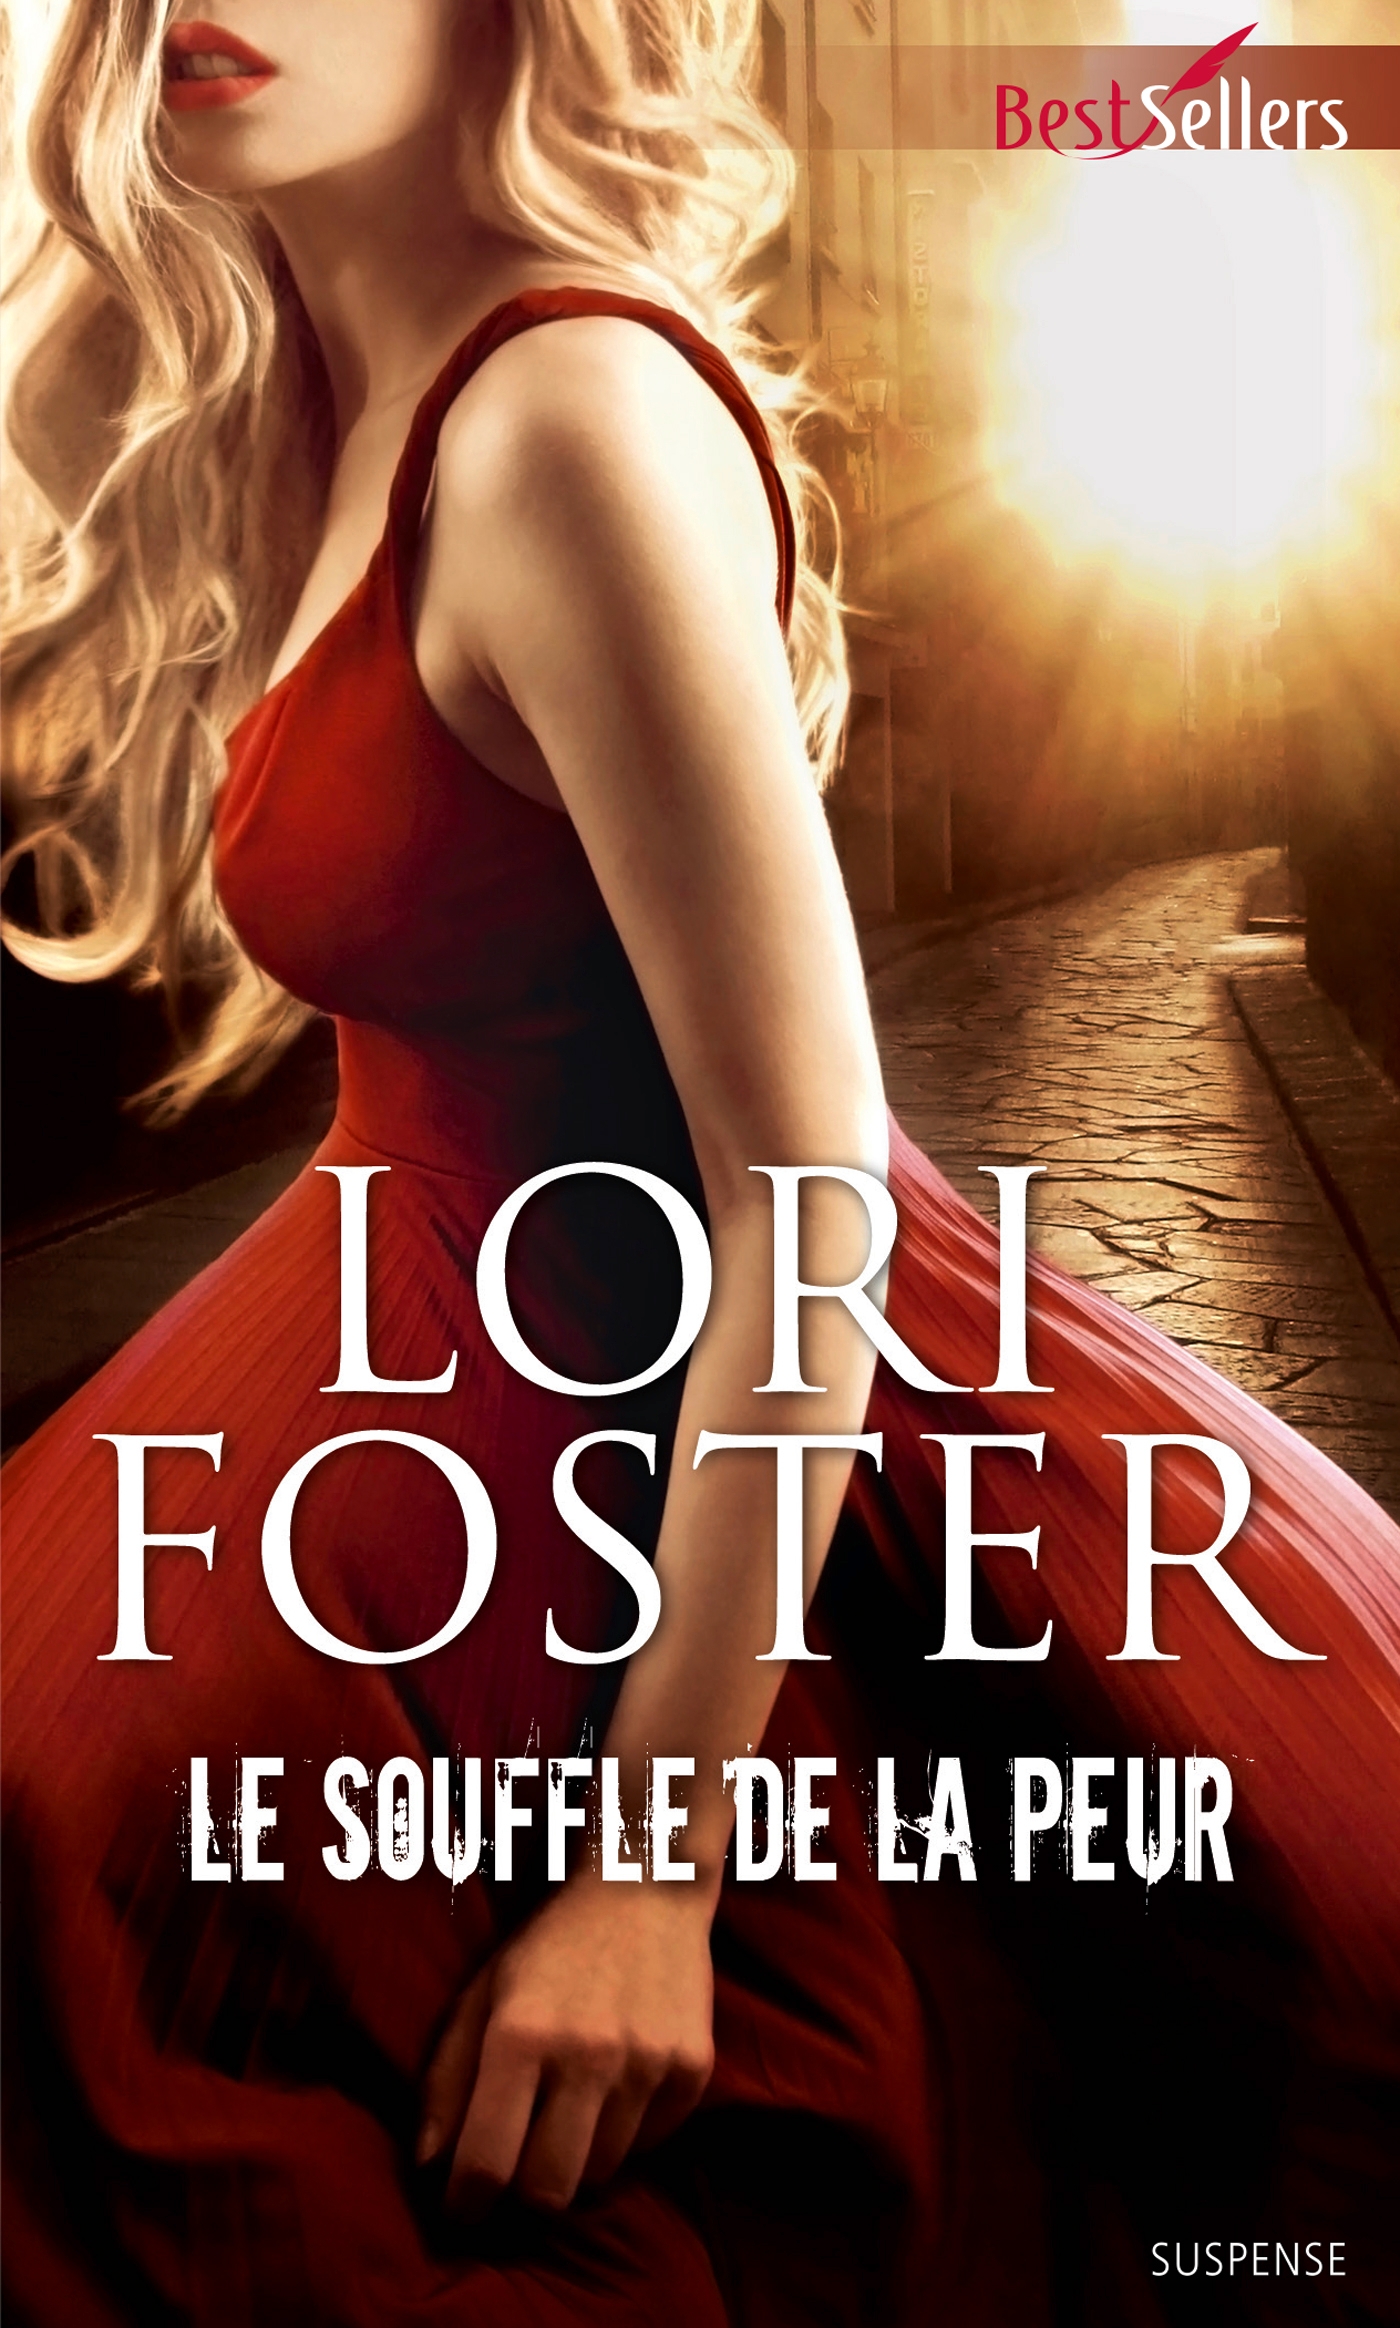 Le souffle de la peur - Lori Foster